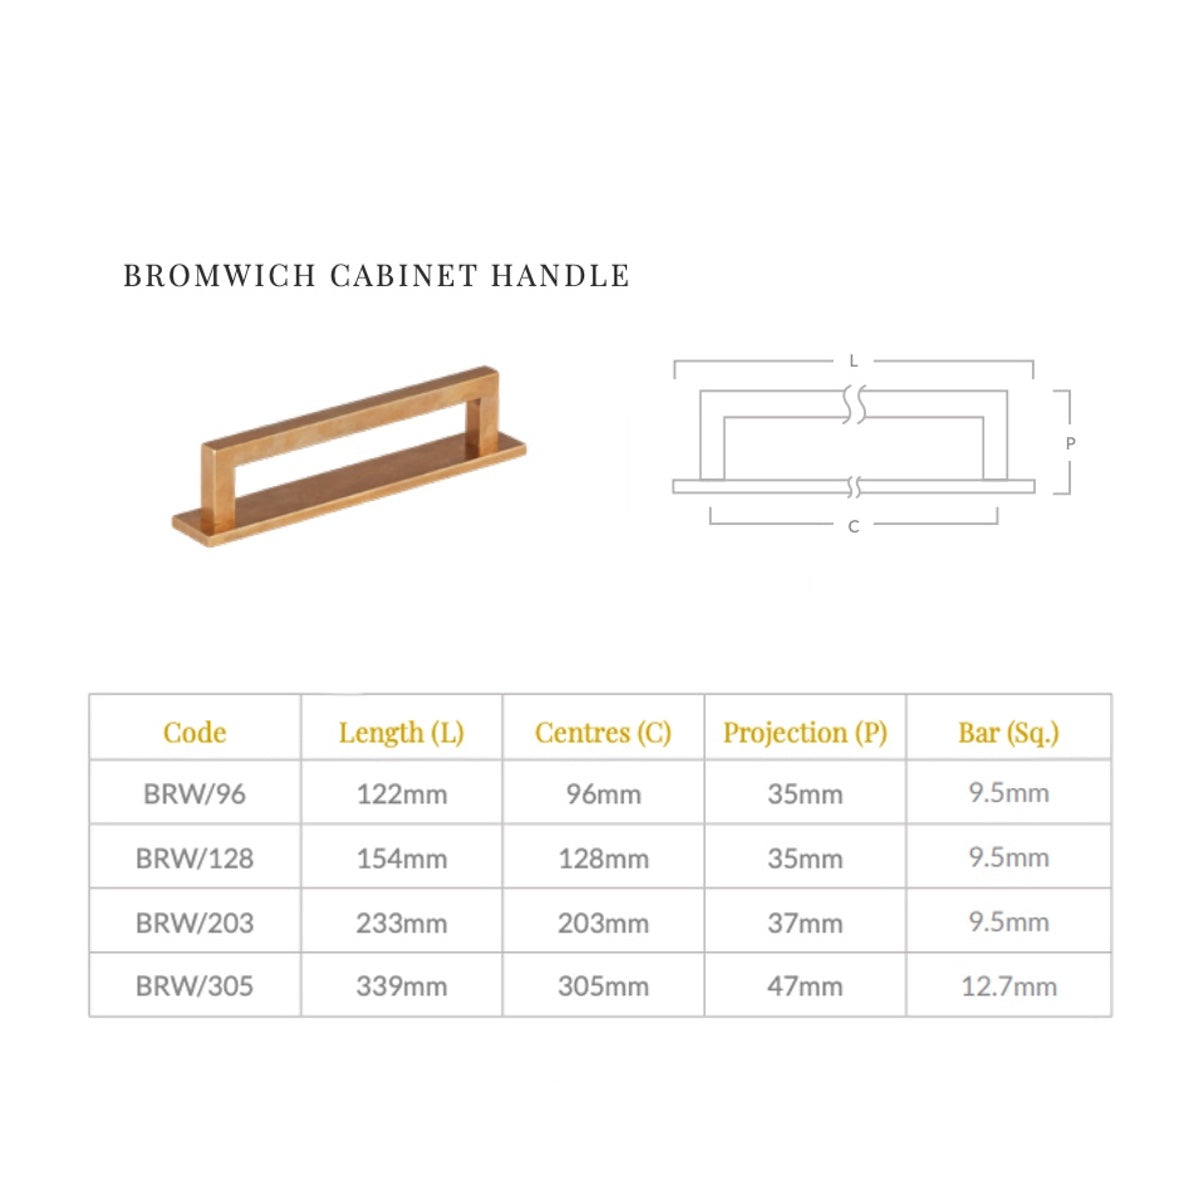 Bromwich Cabinet Handle